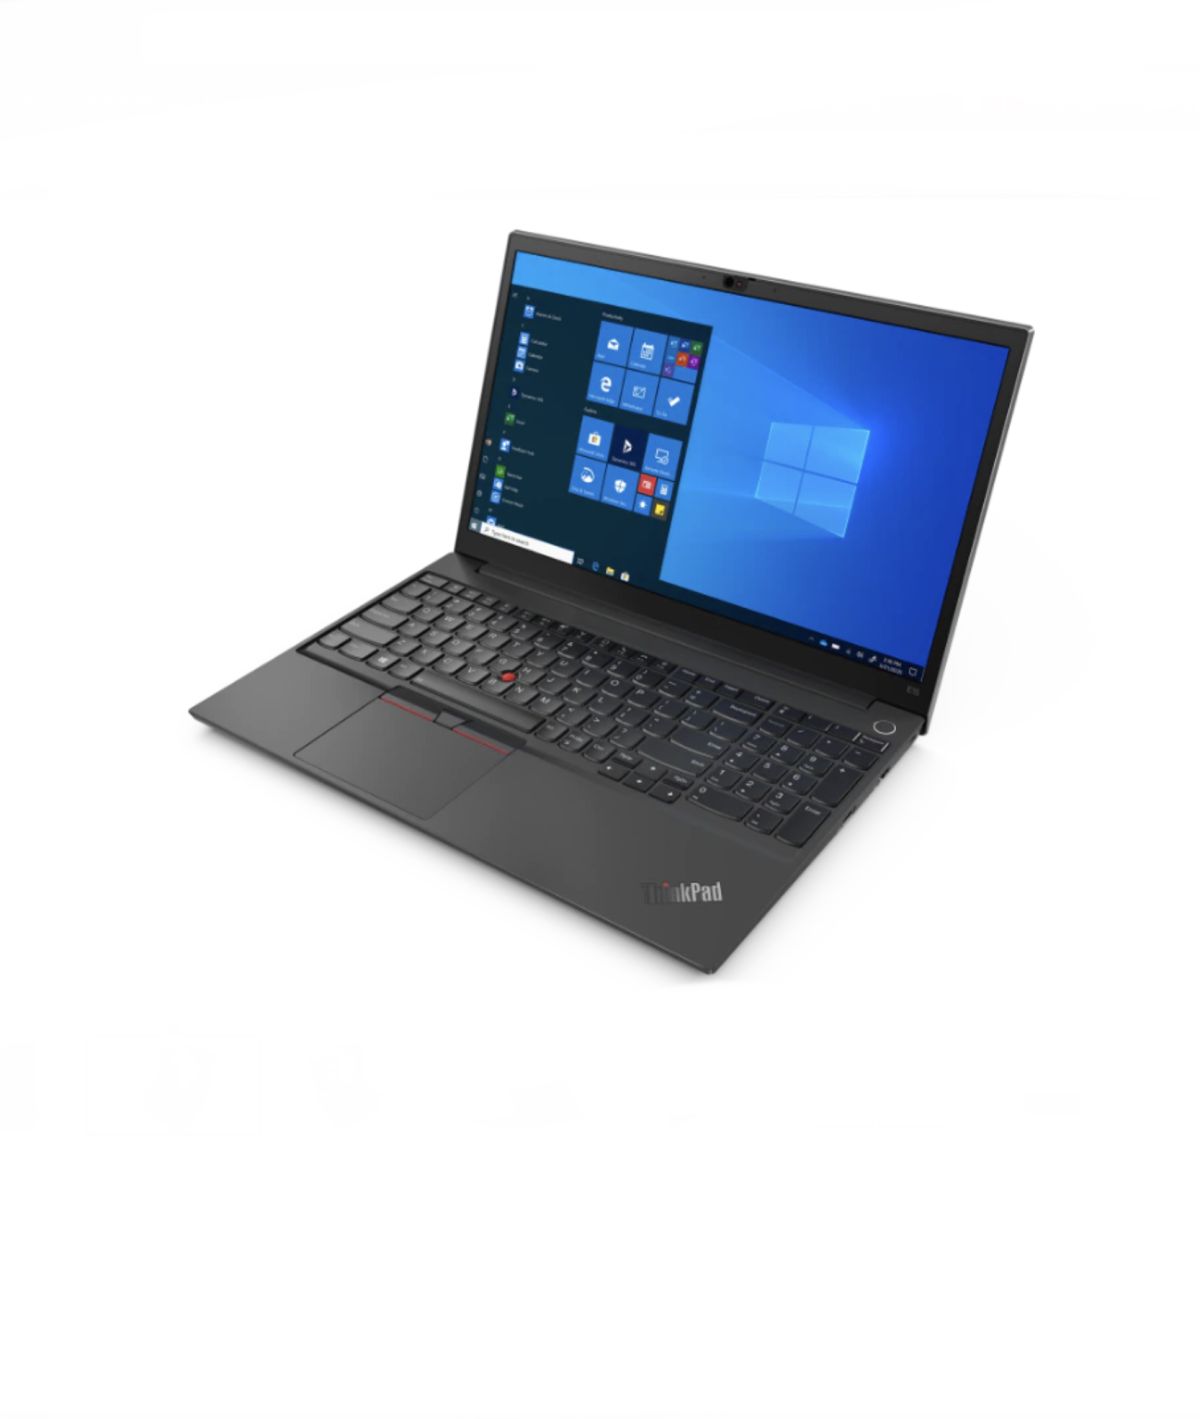 Lenovo ThinkPad P50 Intel core i7-6820HQ 2.7Ghz 16 Go SSD 256 Go HDD 500 Go